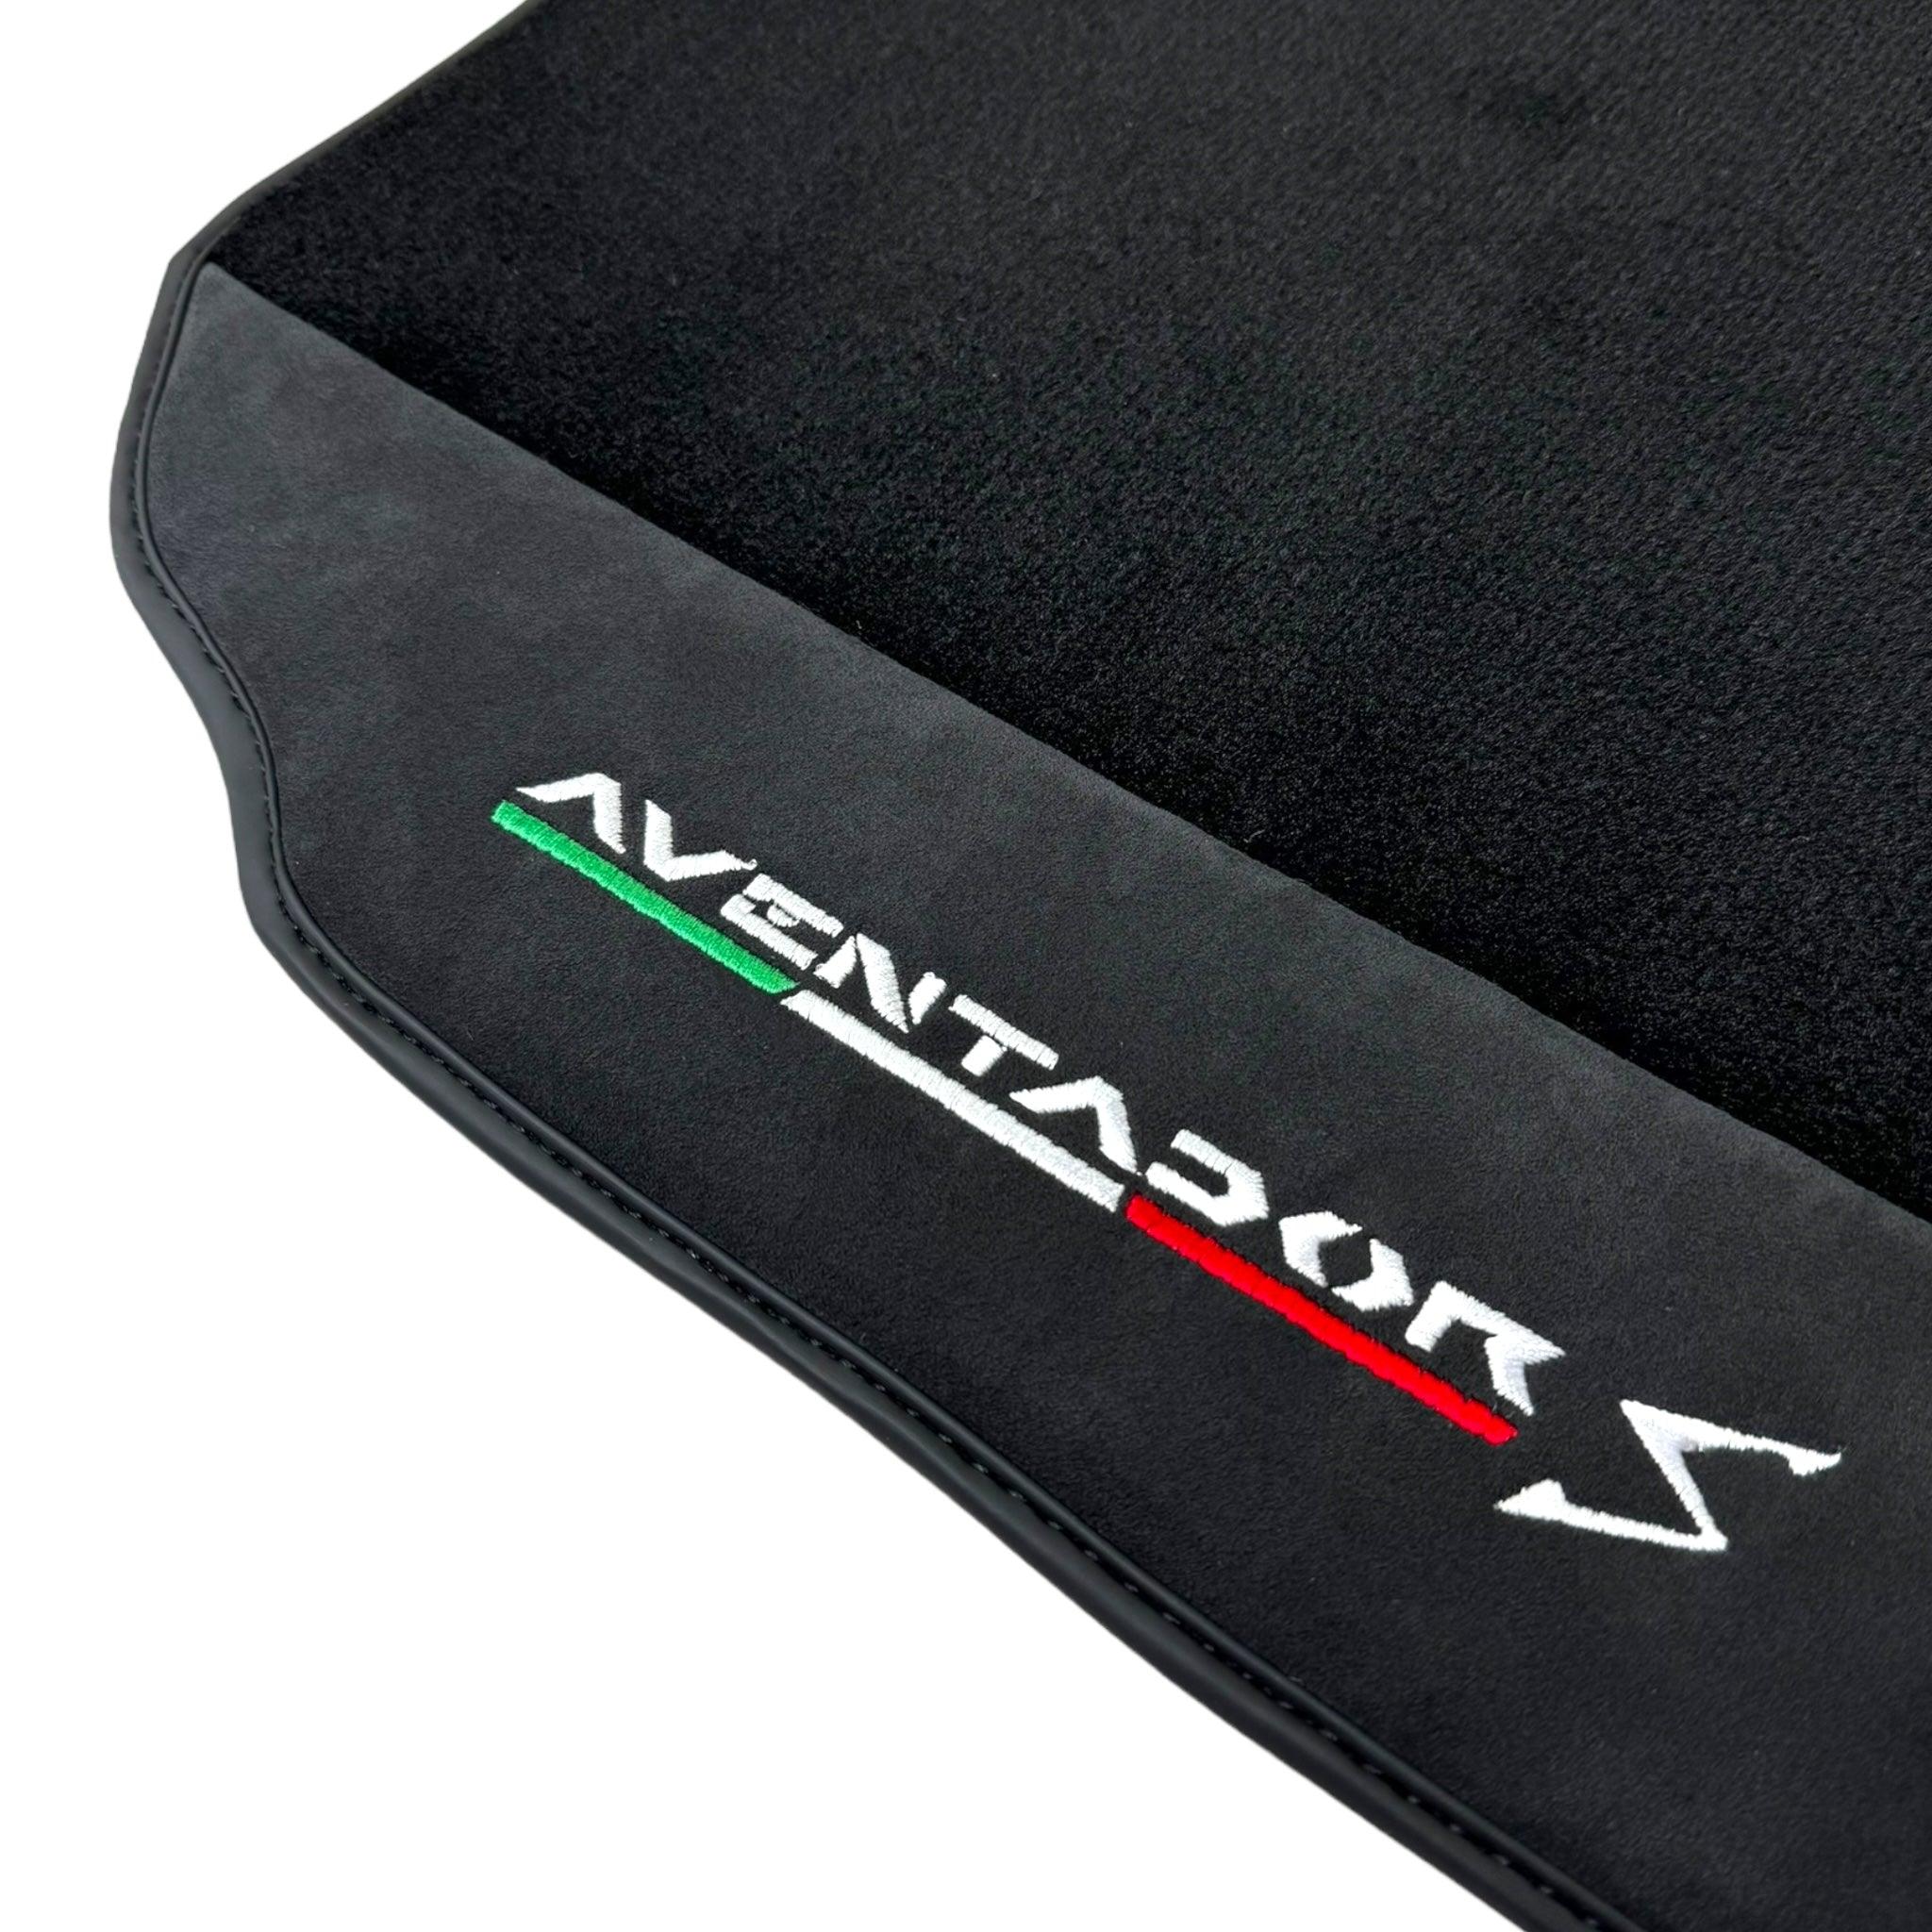 Black Floor Mats for Lamborghini Aventador S with Alcantara Leather